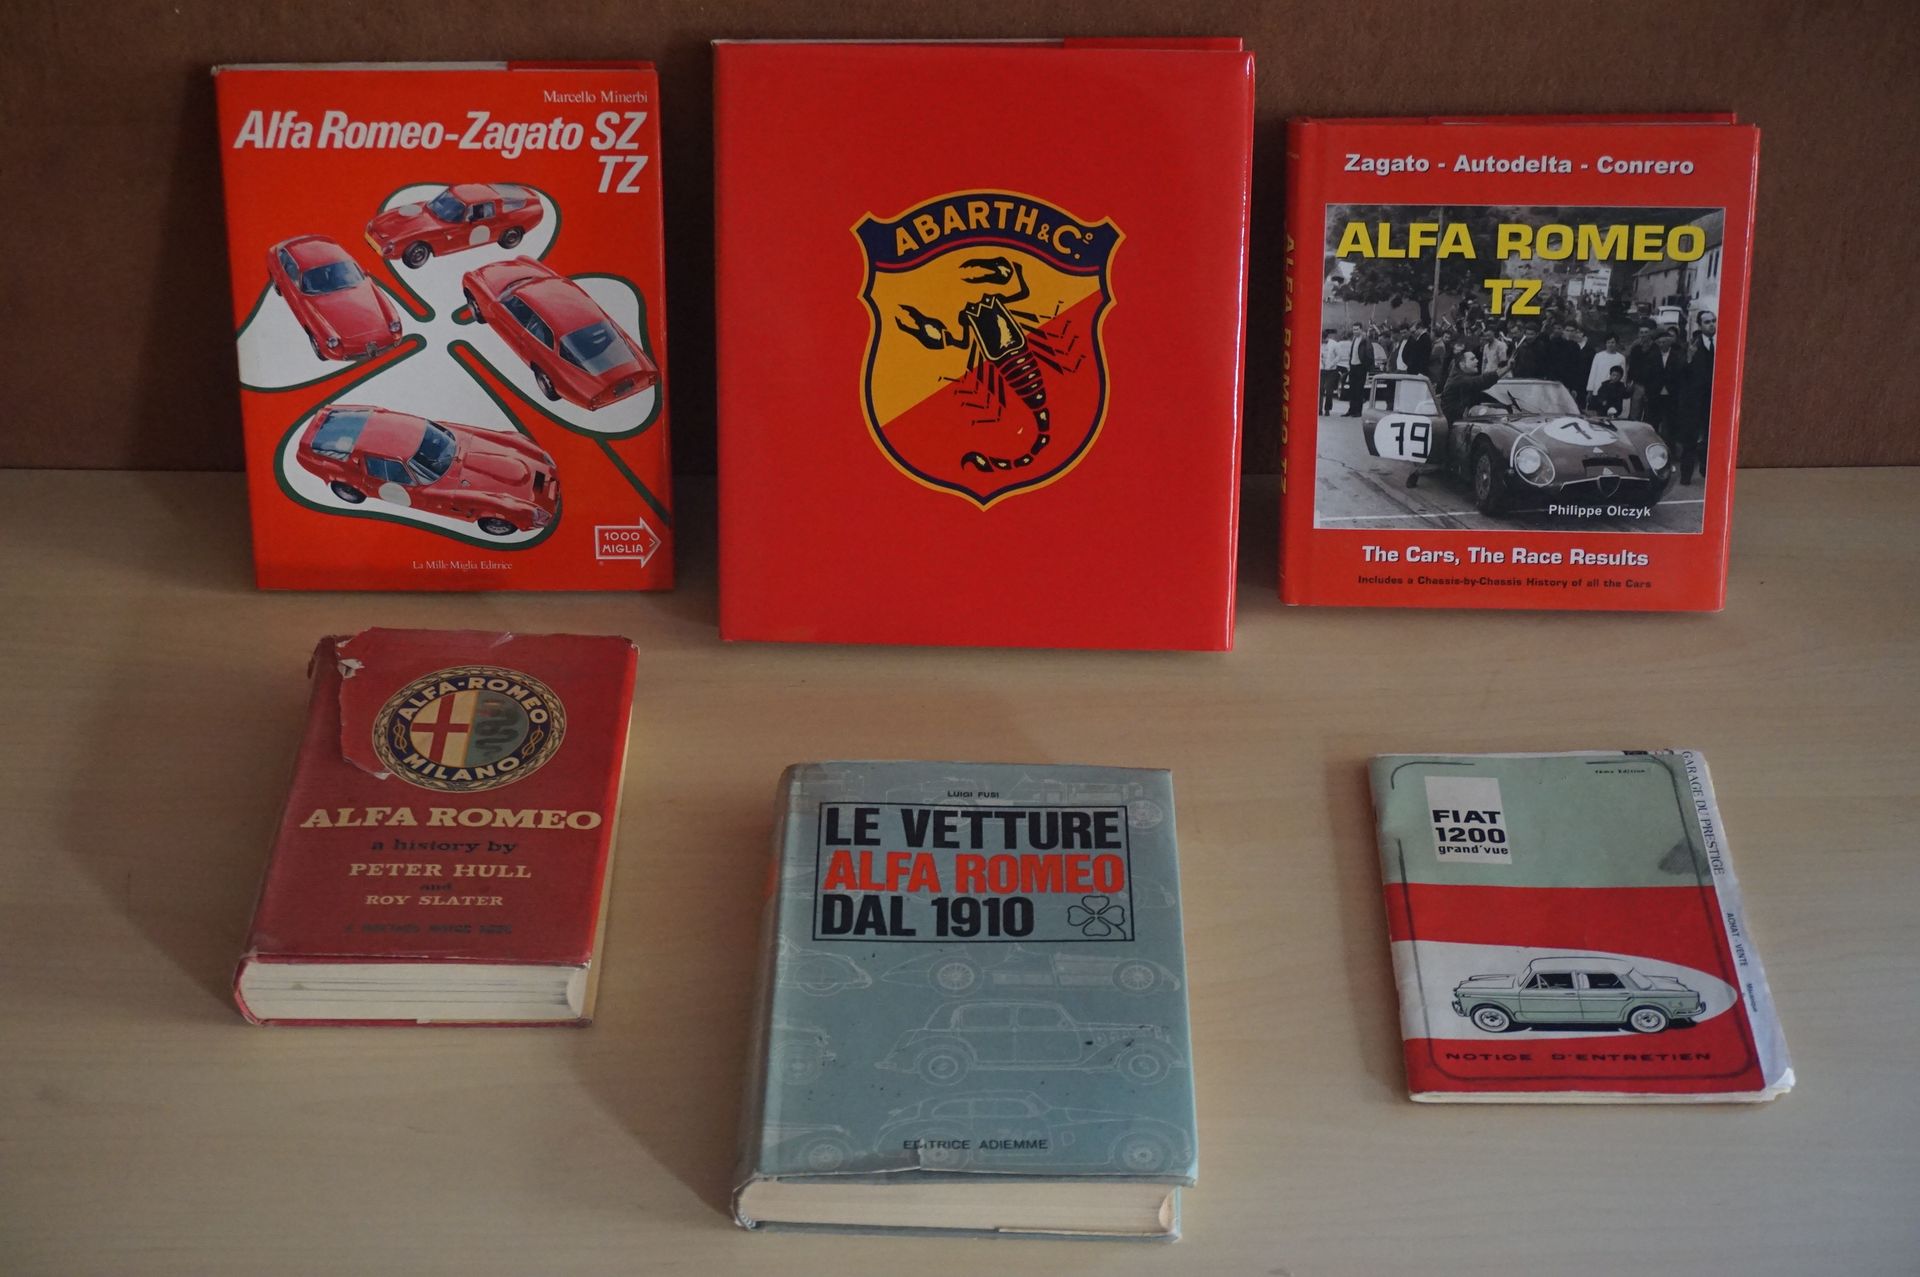 Null Lote de 6 libros 
- Alfa Romeo - Zagato SZ / TZ
- Abarth
- Alfa Romeo TZ
- &hellip;